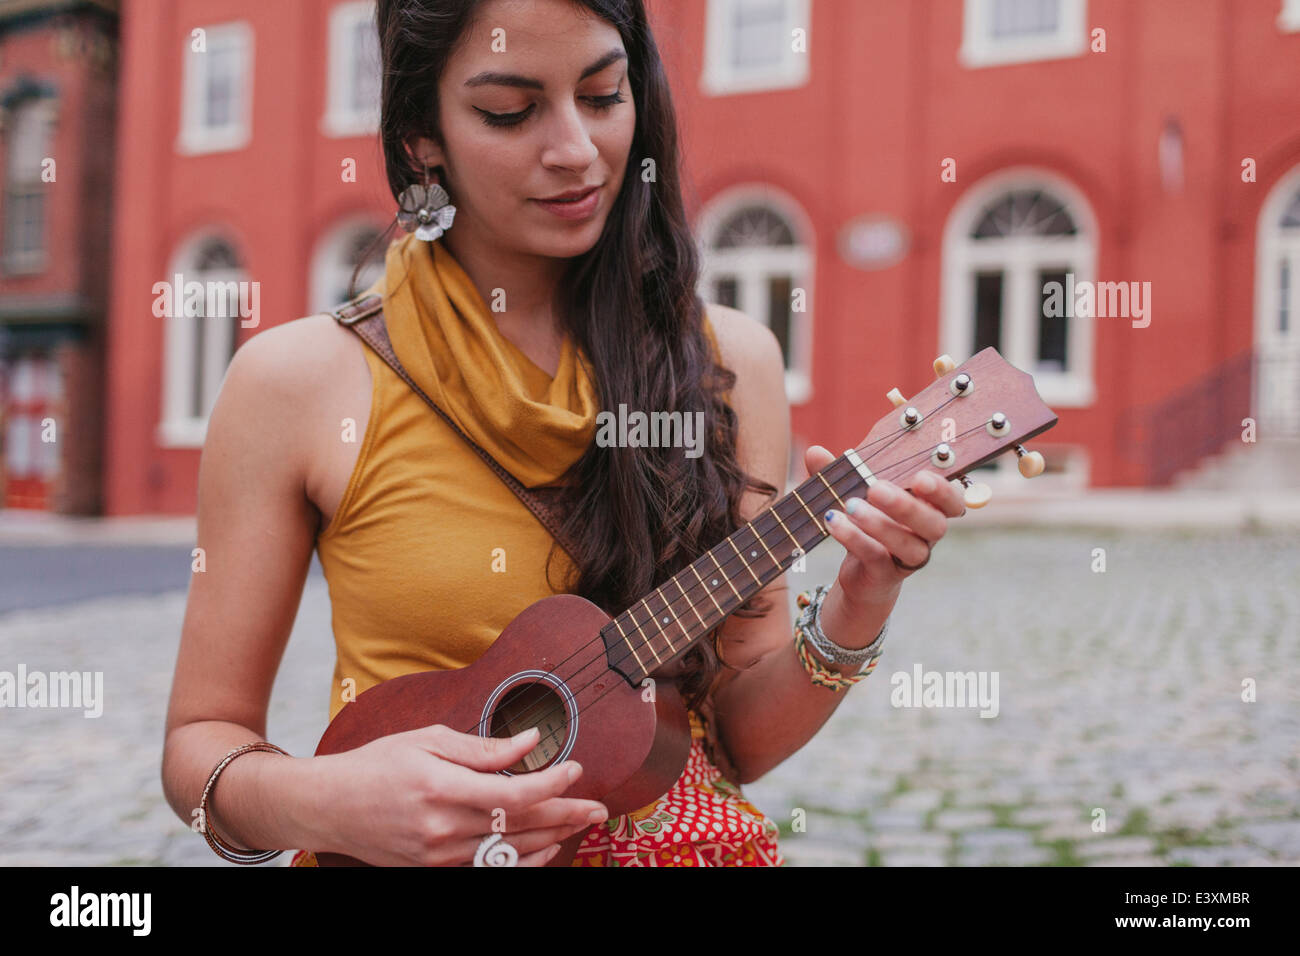 Mixed race woman playing ukulele on city street Stock Photo